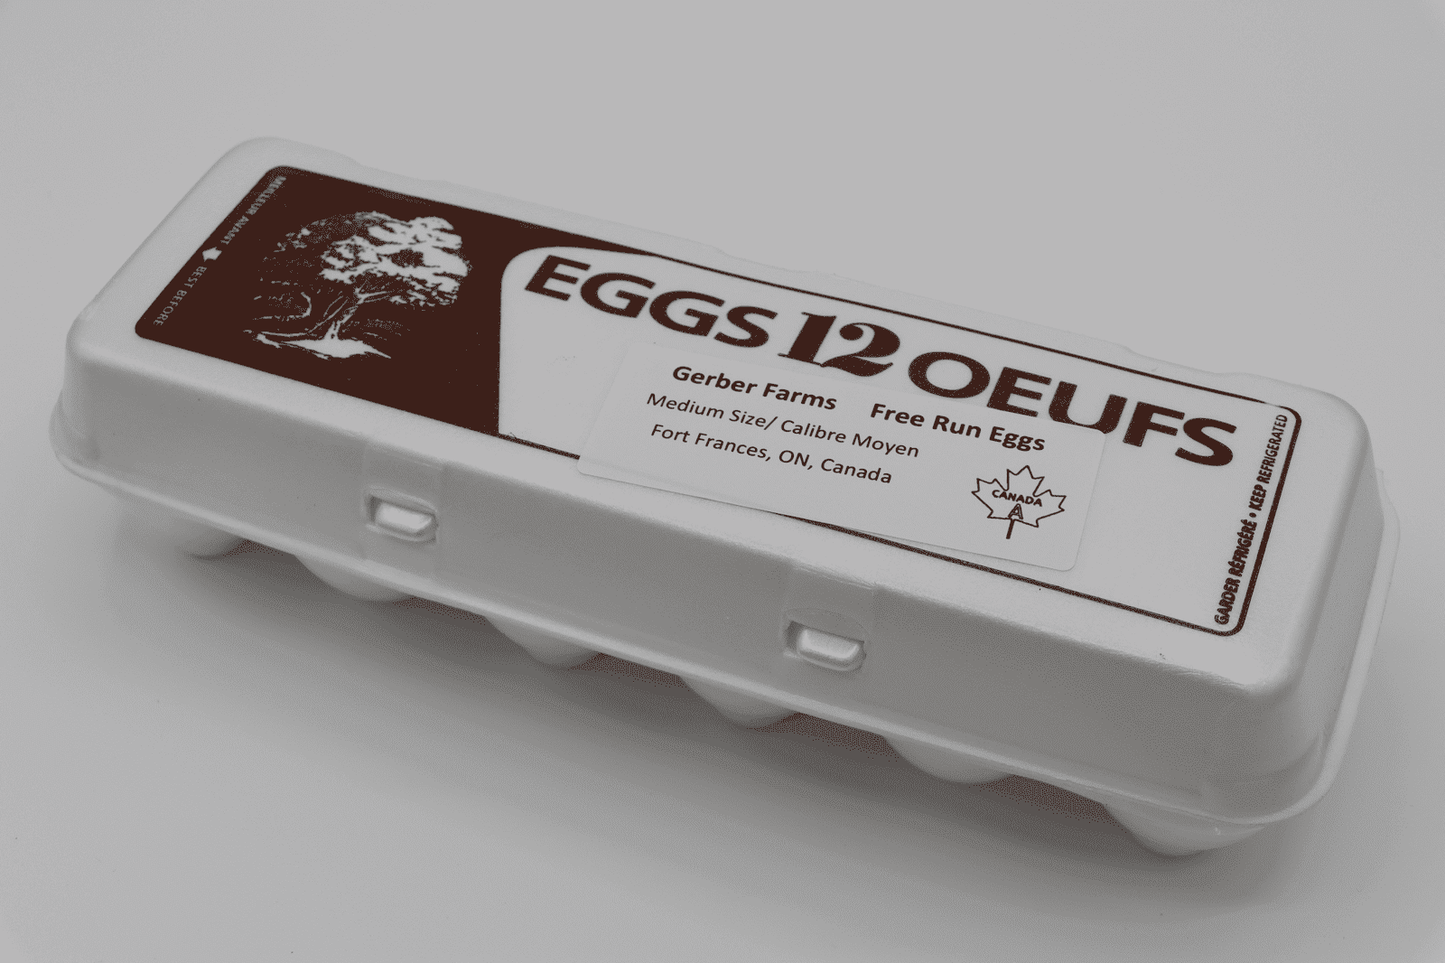 Eggs